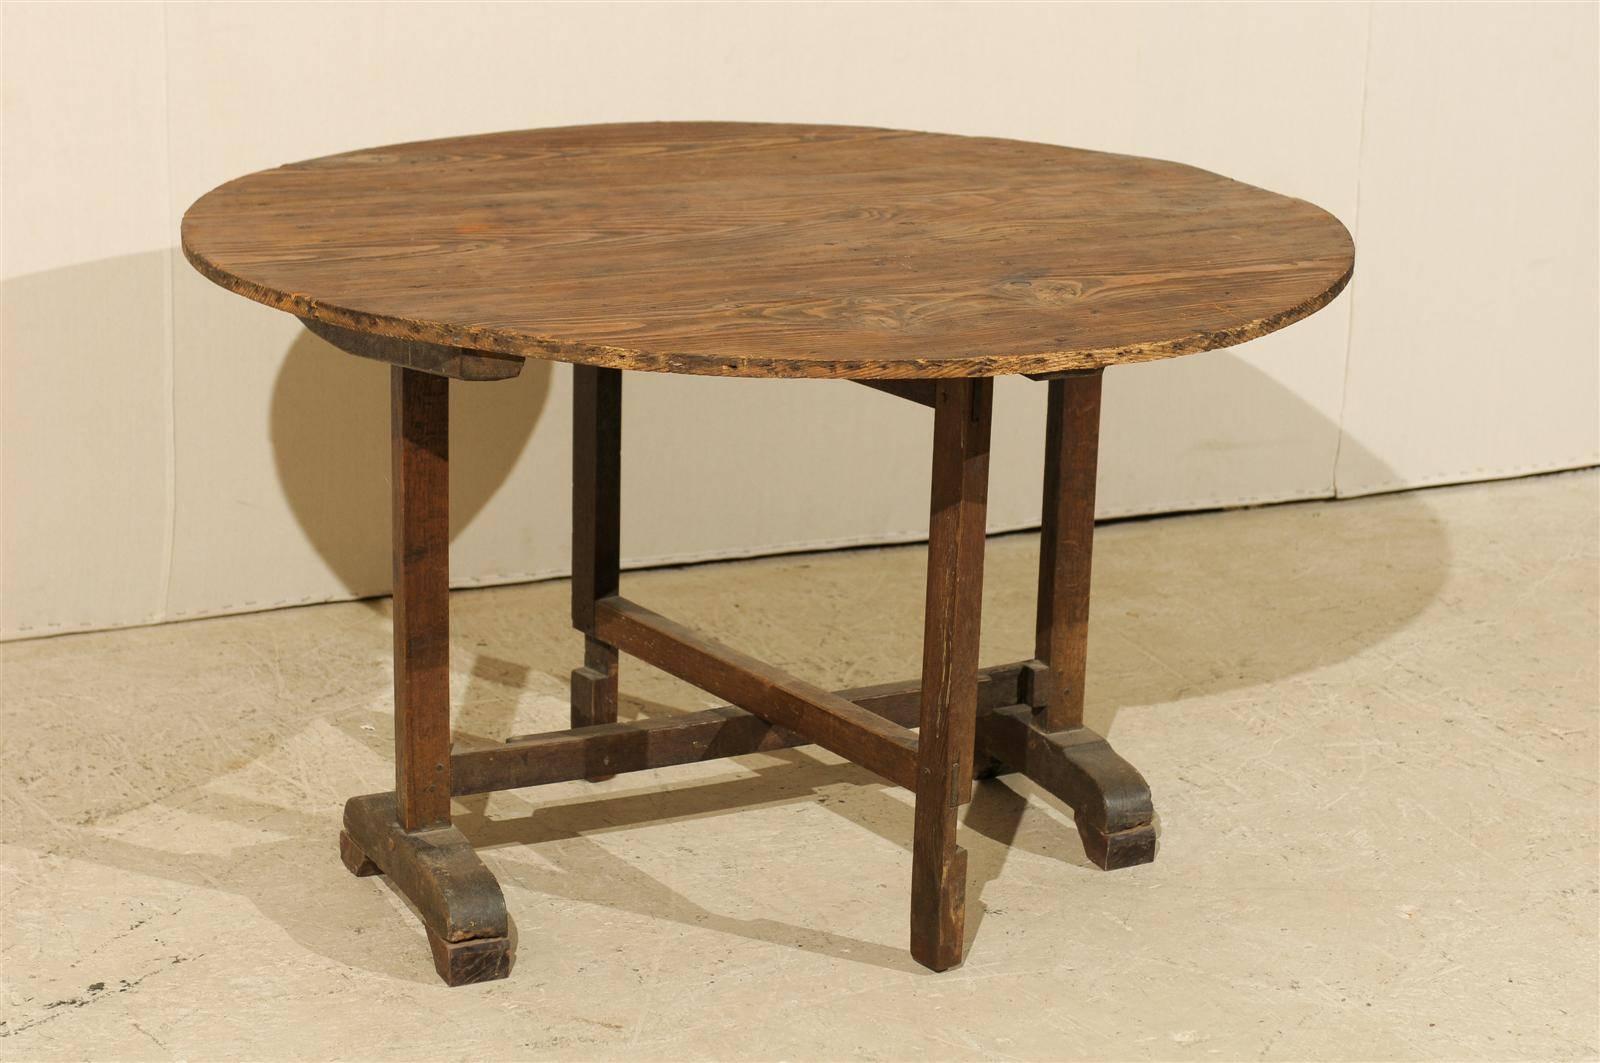 wood grain table